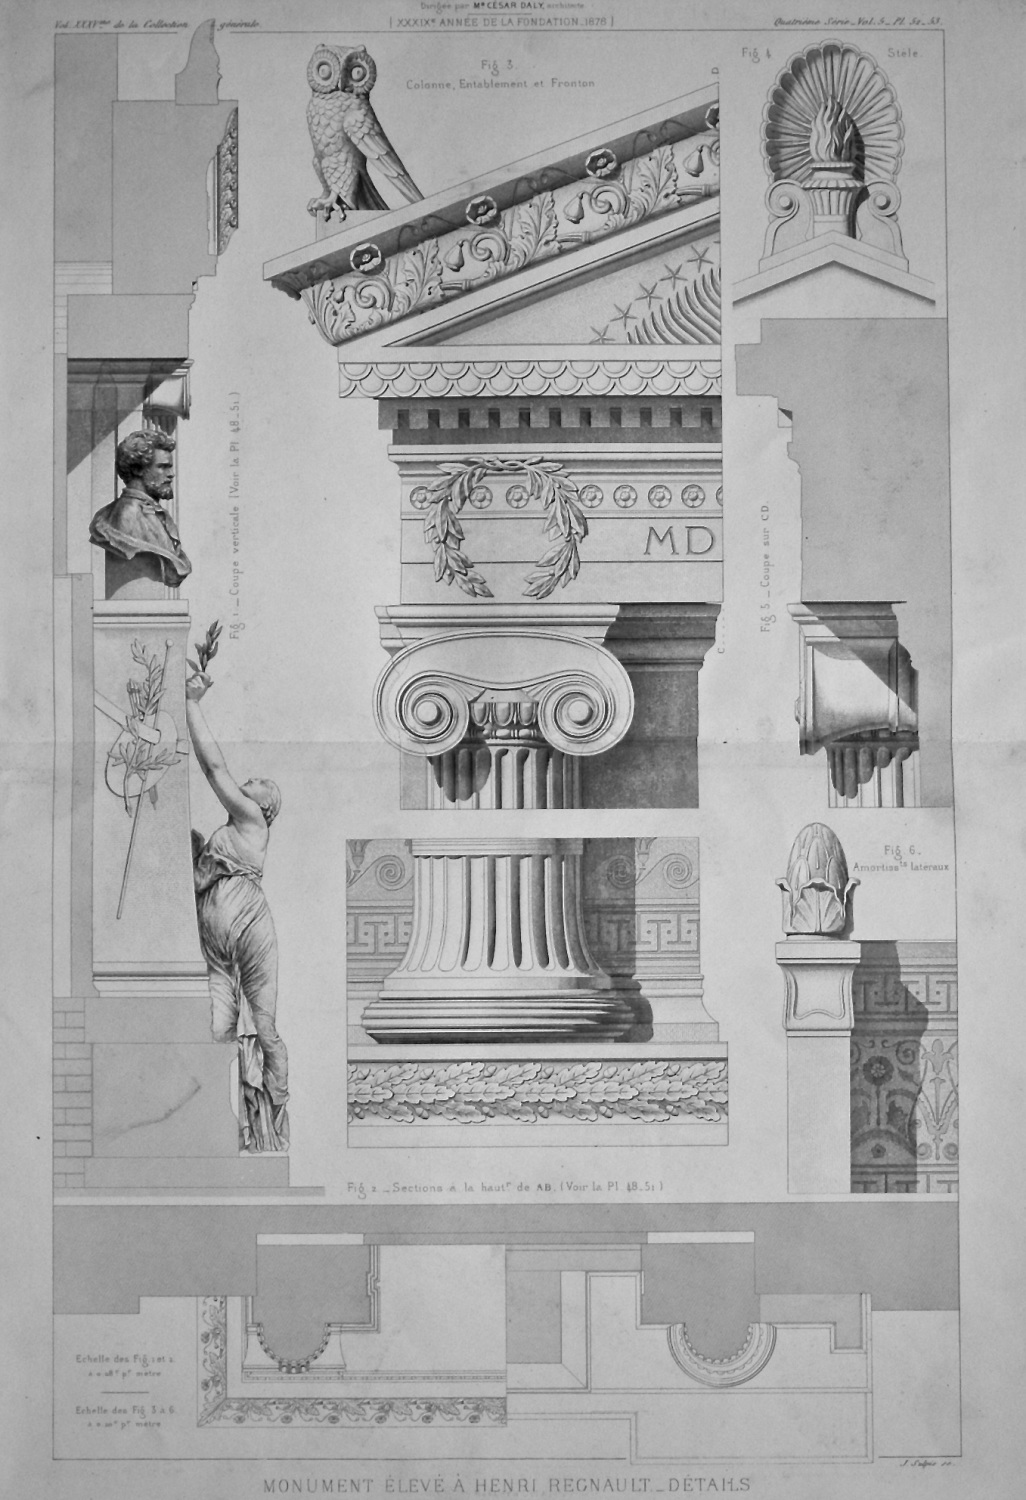 Monument Eleve A Henri Renault.- Details. 1878.